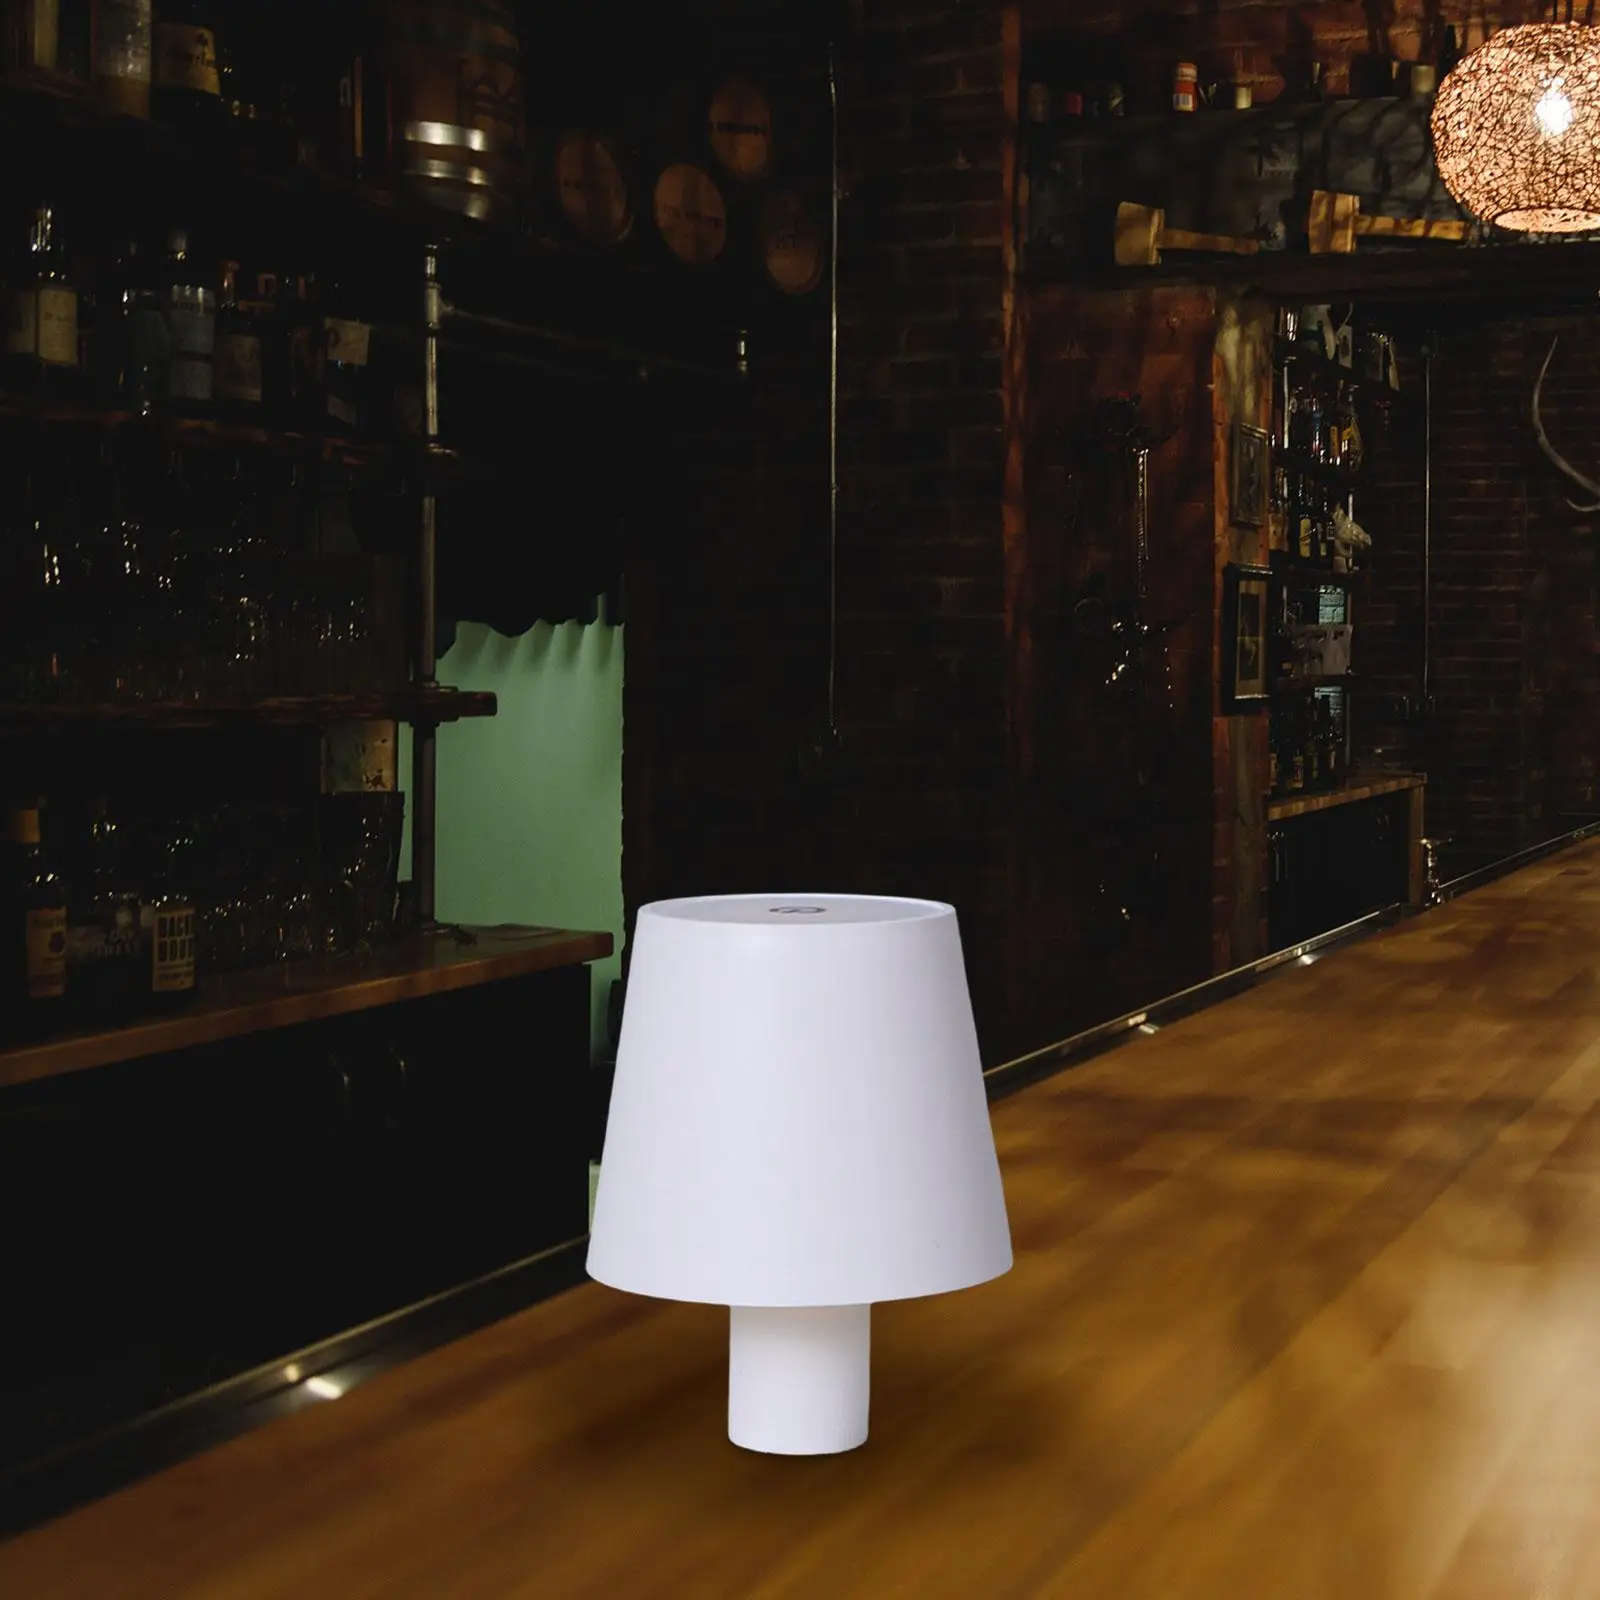 LED Bedside Table Lamp Rechargeable Creative Night Light Desk Lamp for Dorm Kids Room Bedroom Living Room